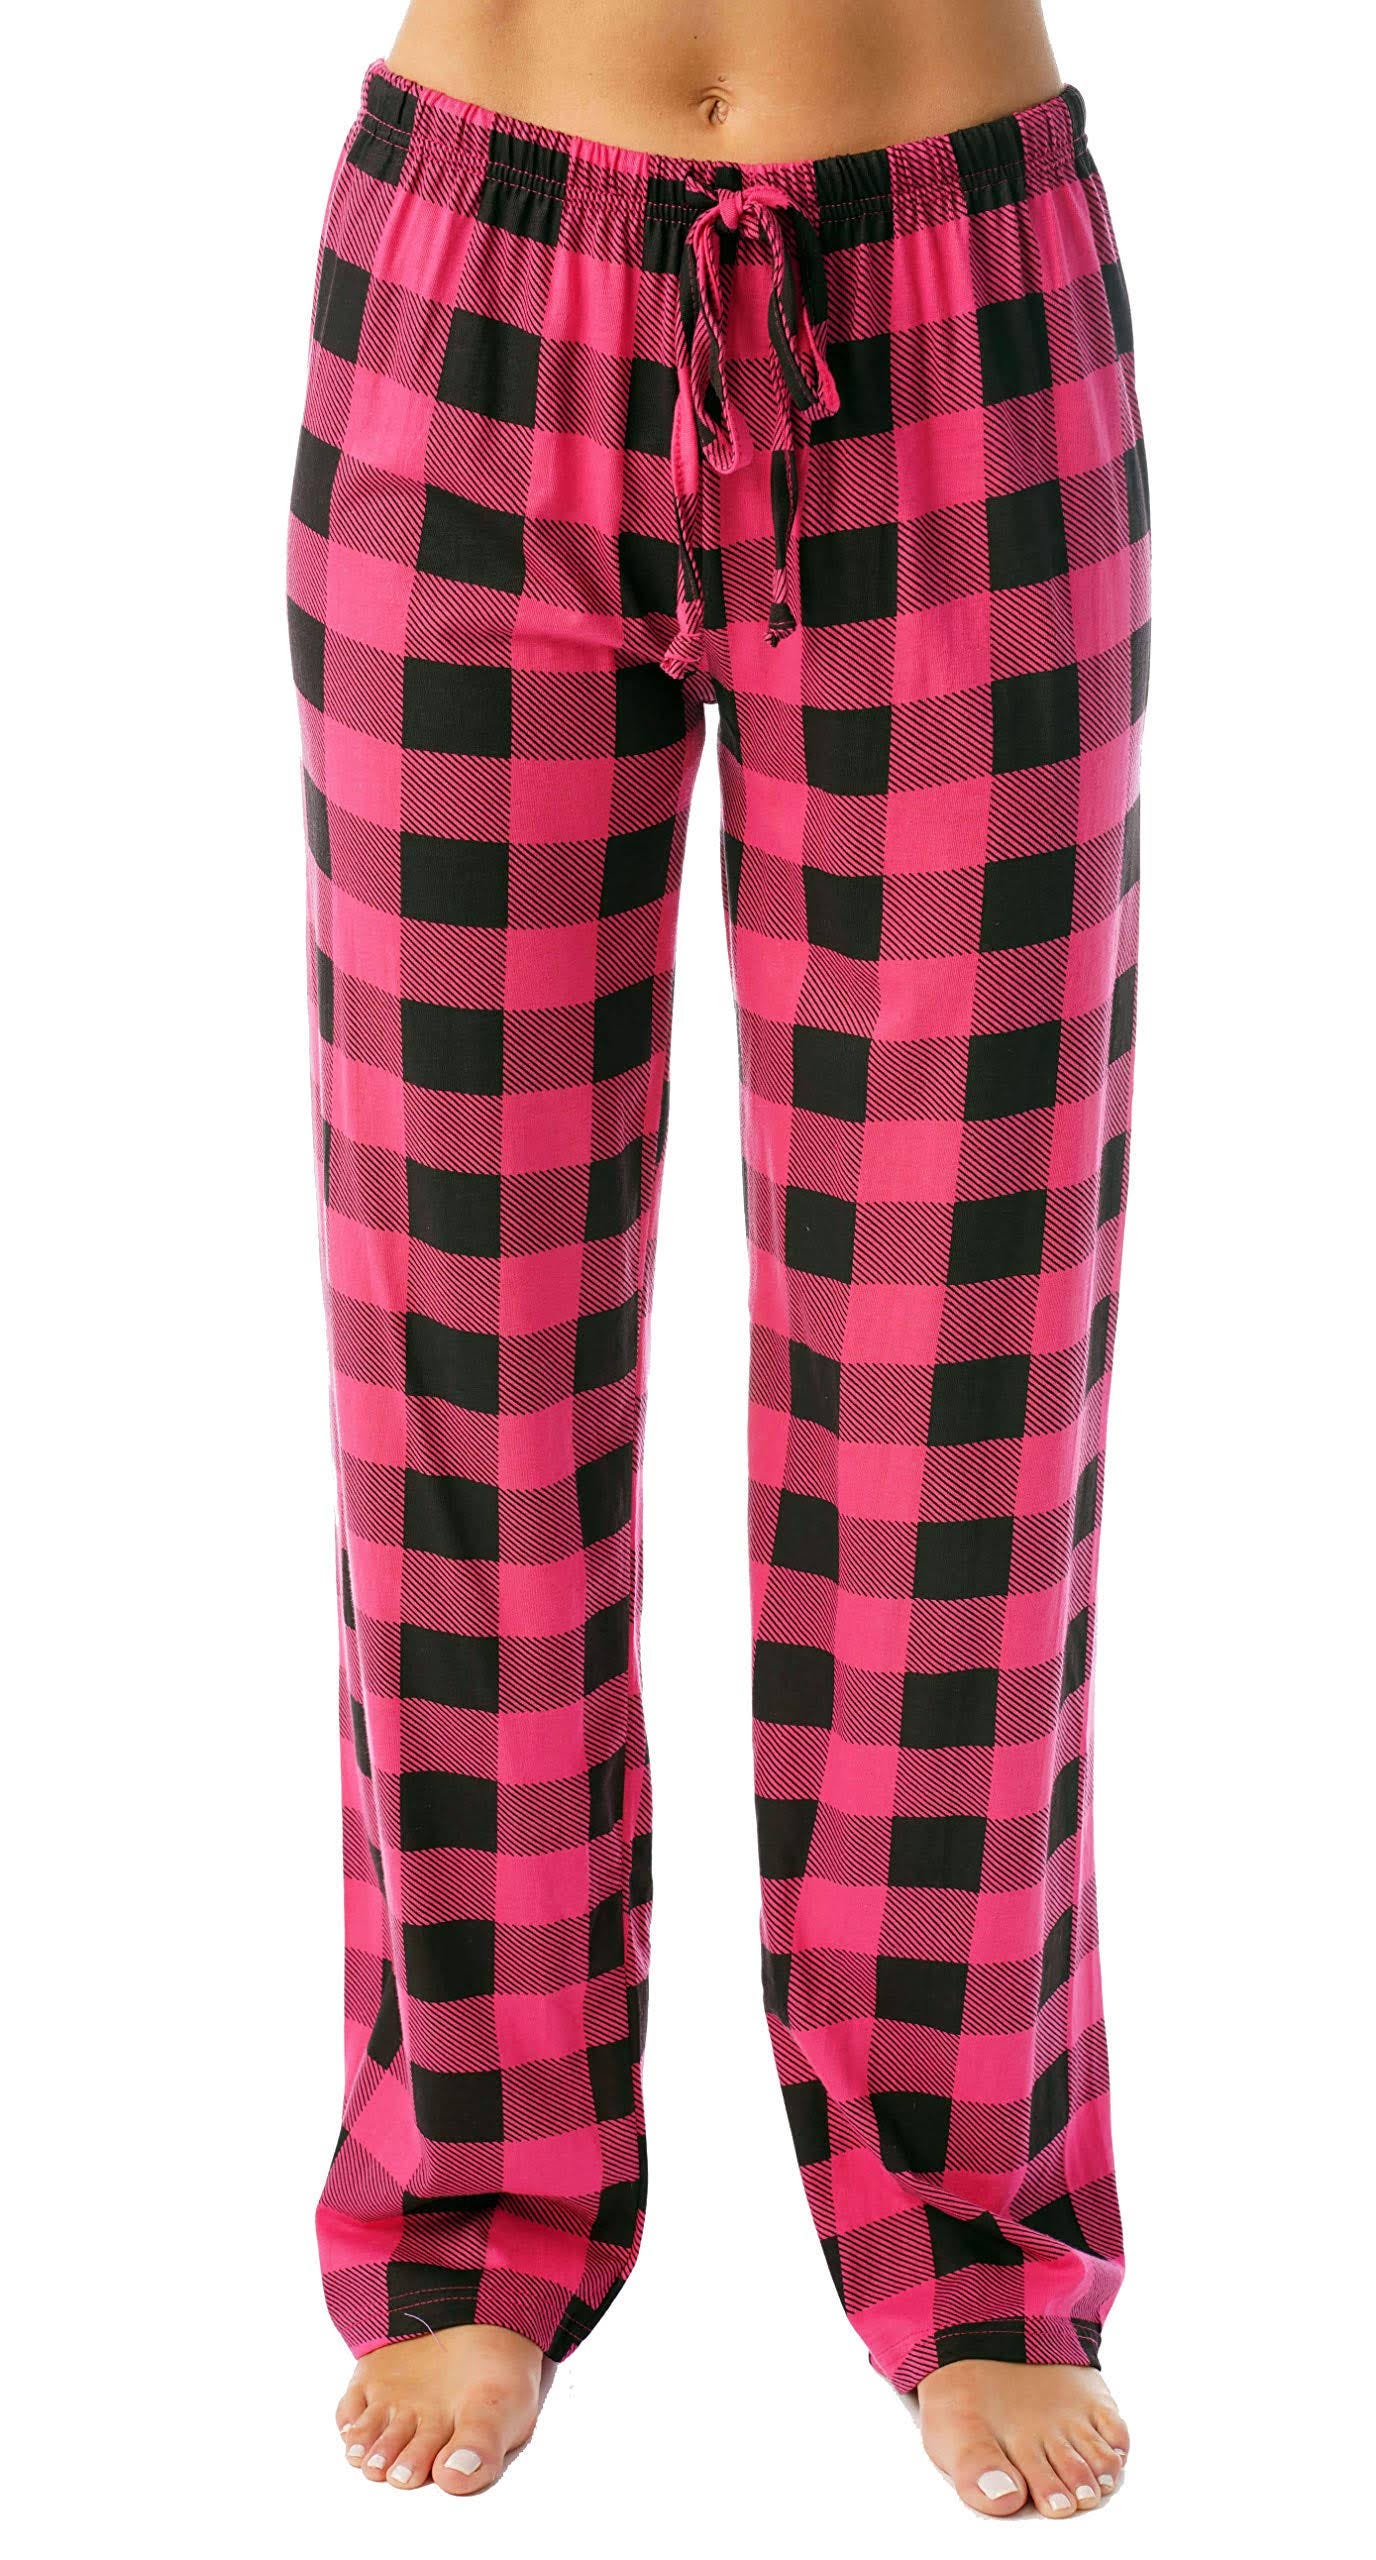 Cute and Comfy Plus Size Pajama Pants | Image